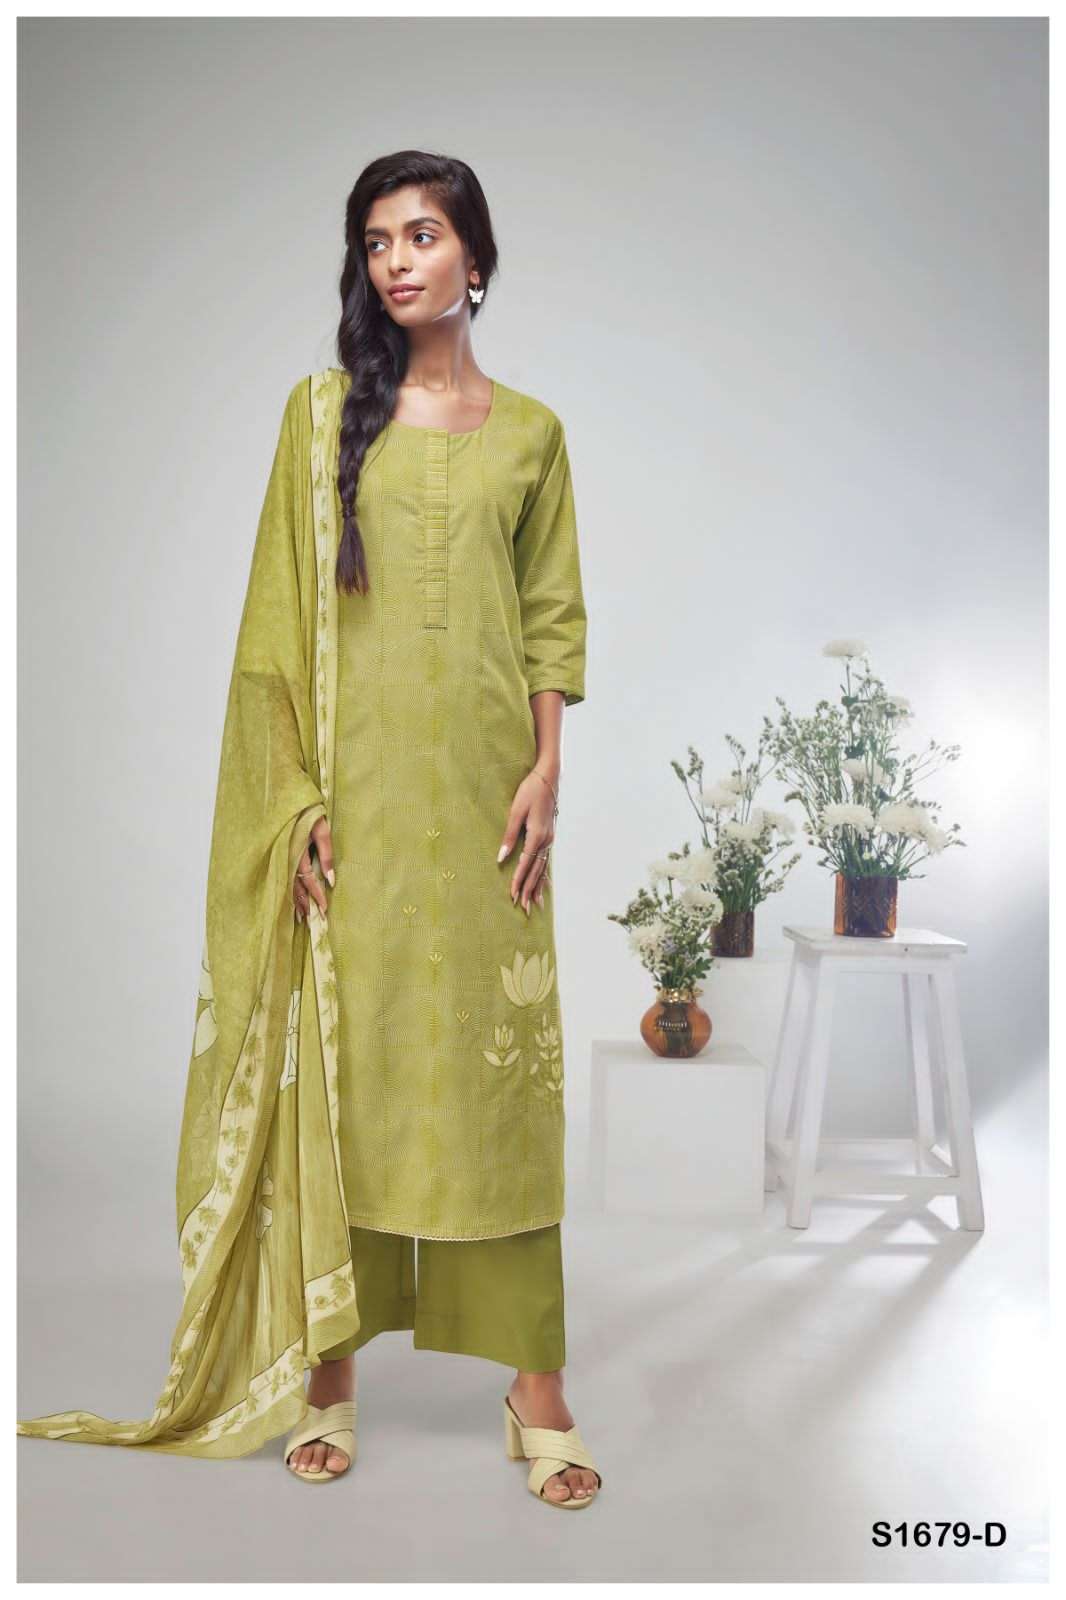 ganga daksha 1679 series premium cotton designer salwar kameez catalogue online market surat